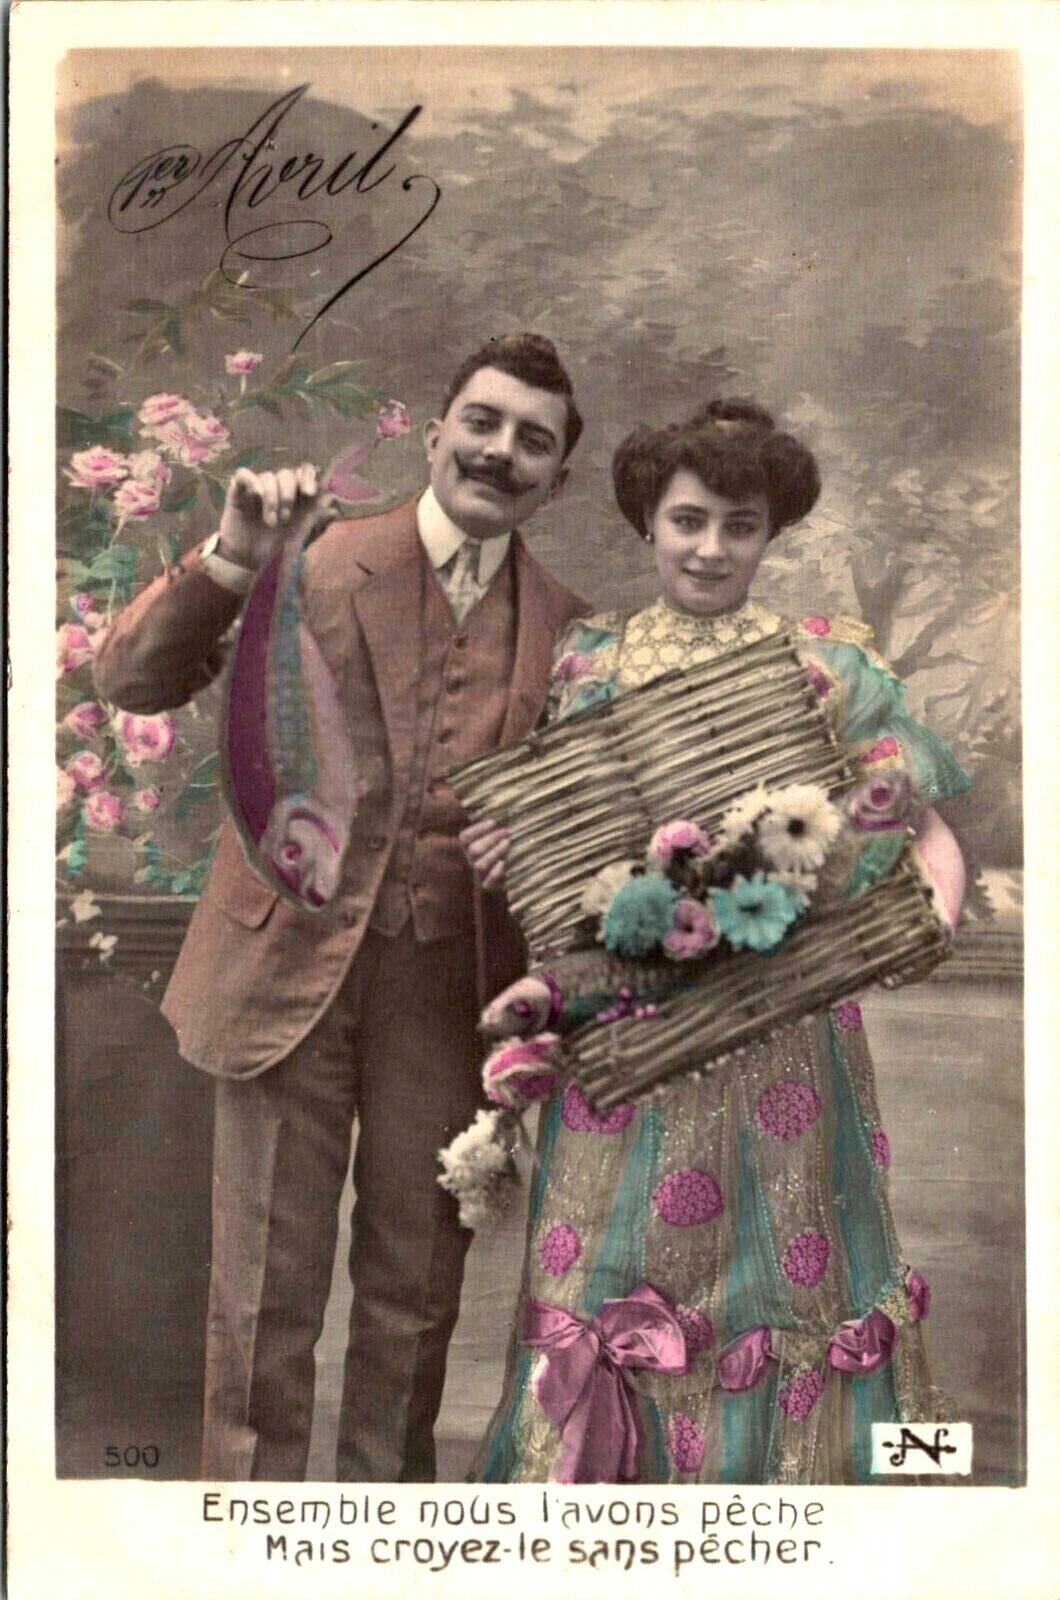 April 1st/April Fish Day France, Couple Holding  Fish, Flowers postcard